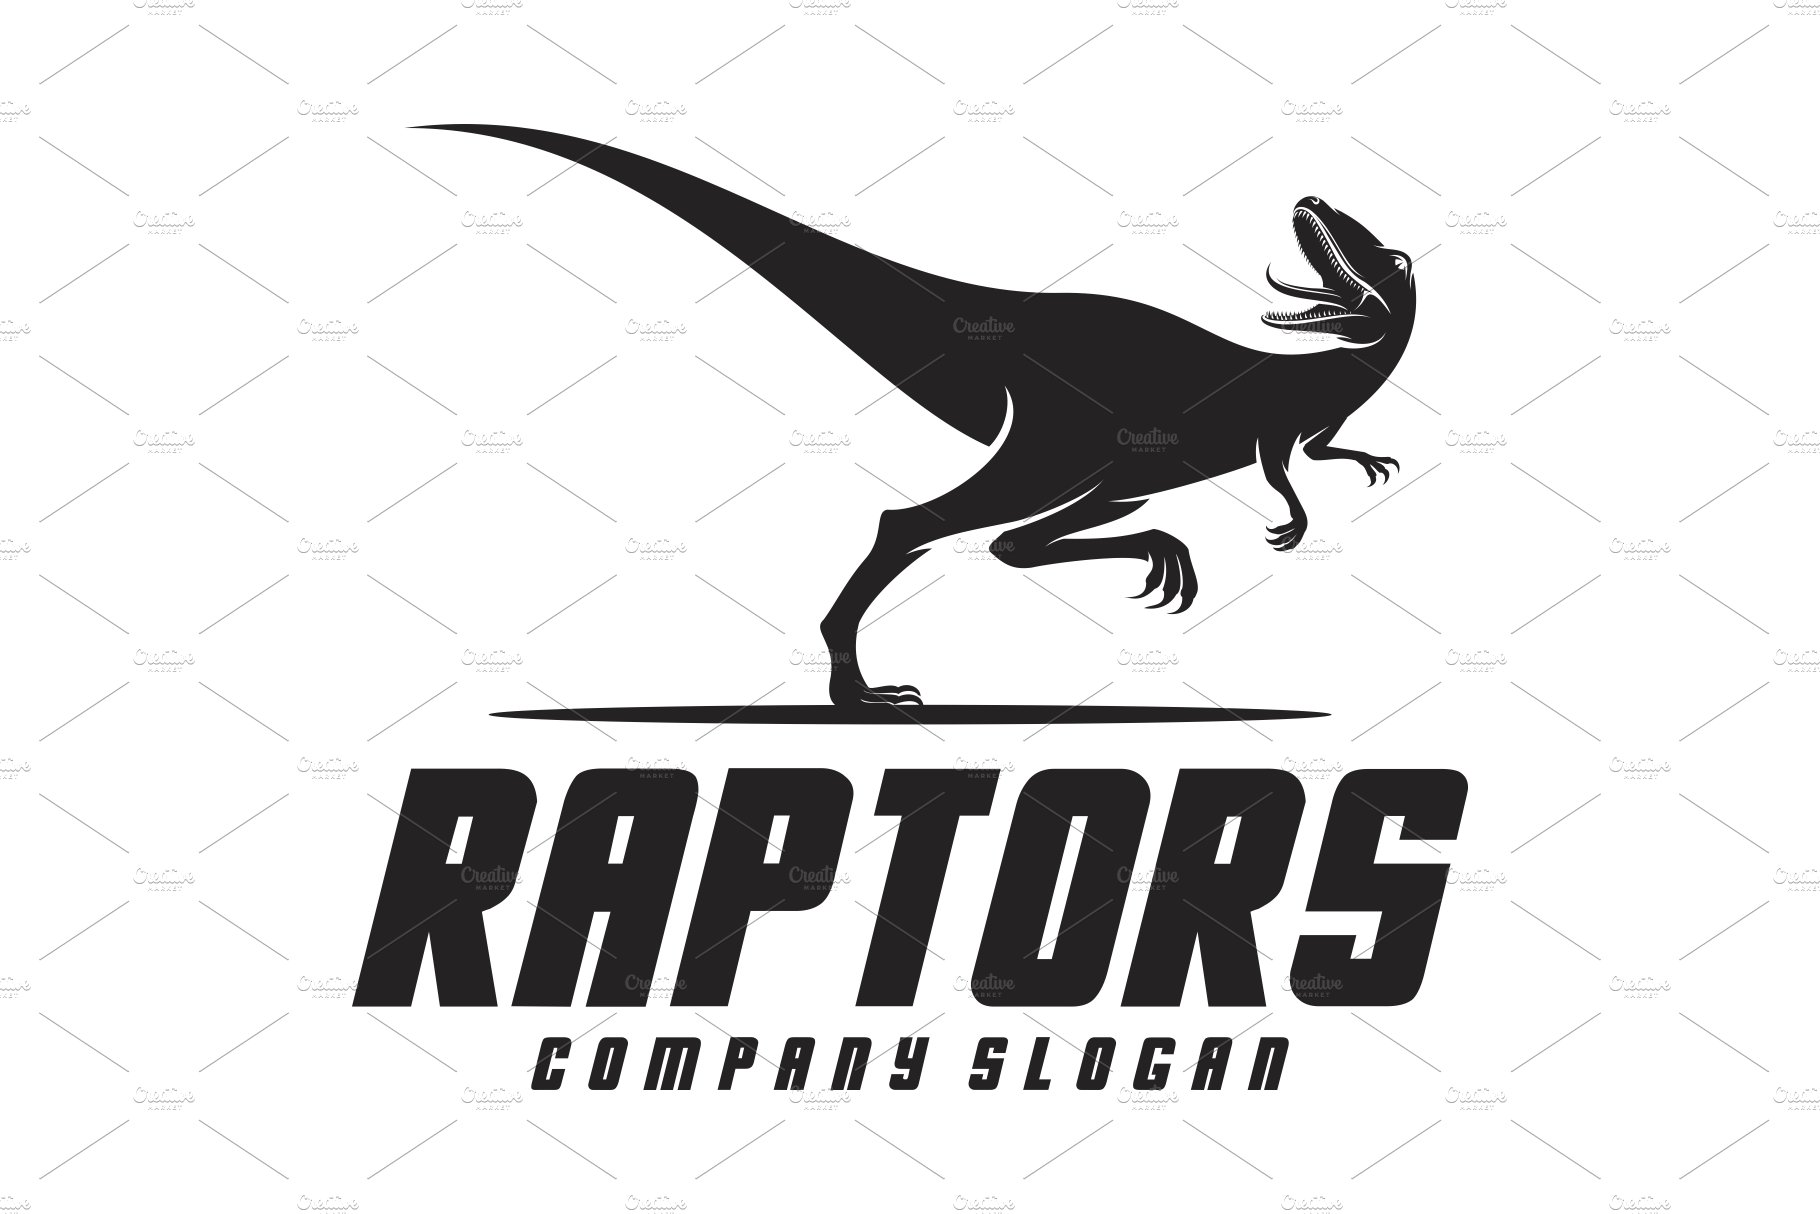 Raptor Logo preview image.